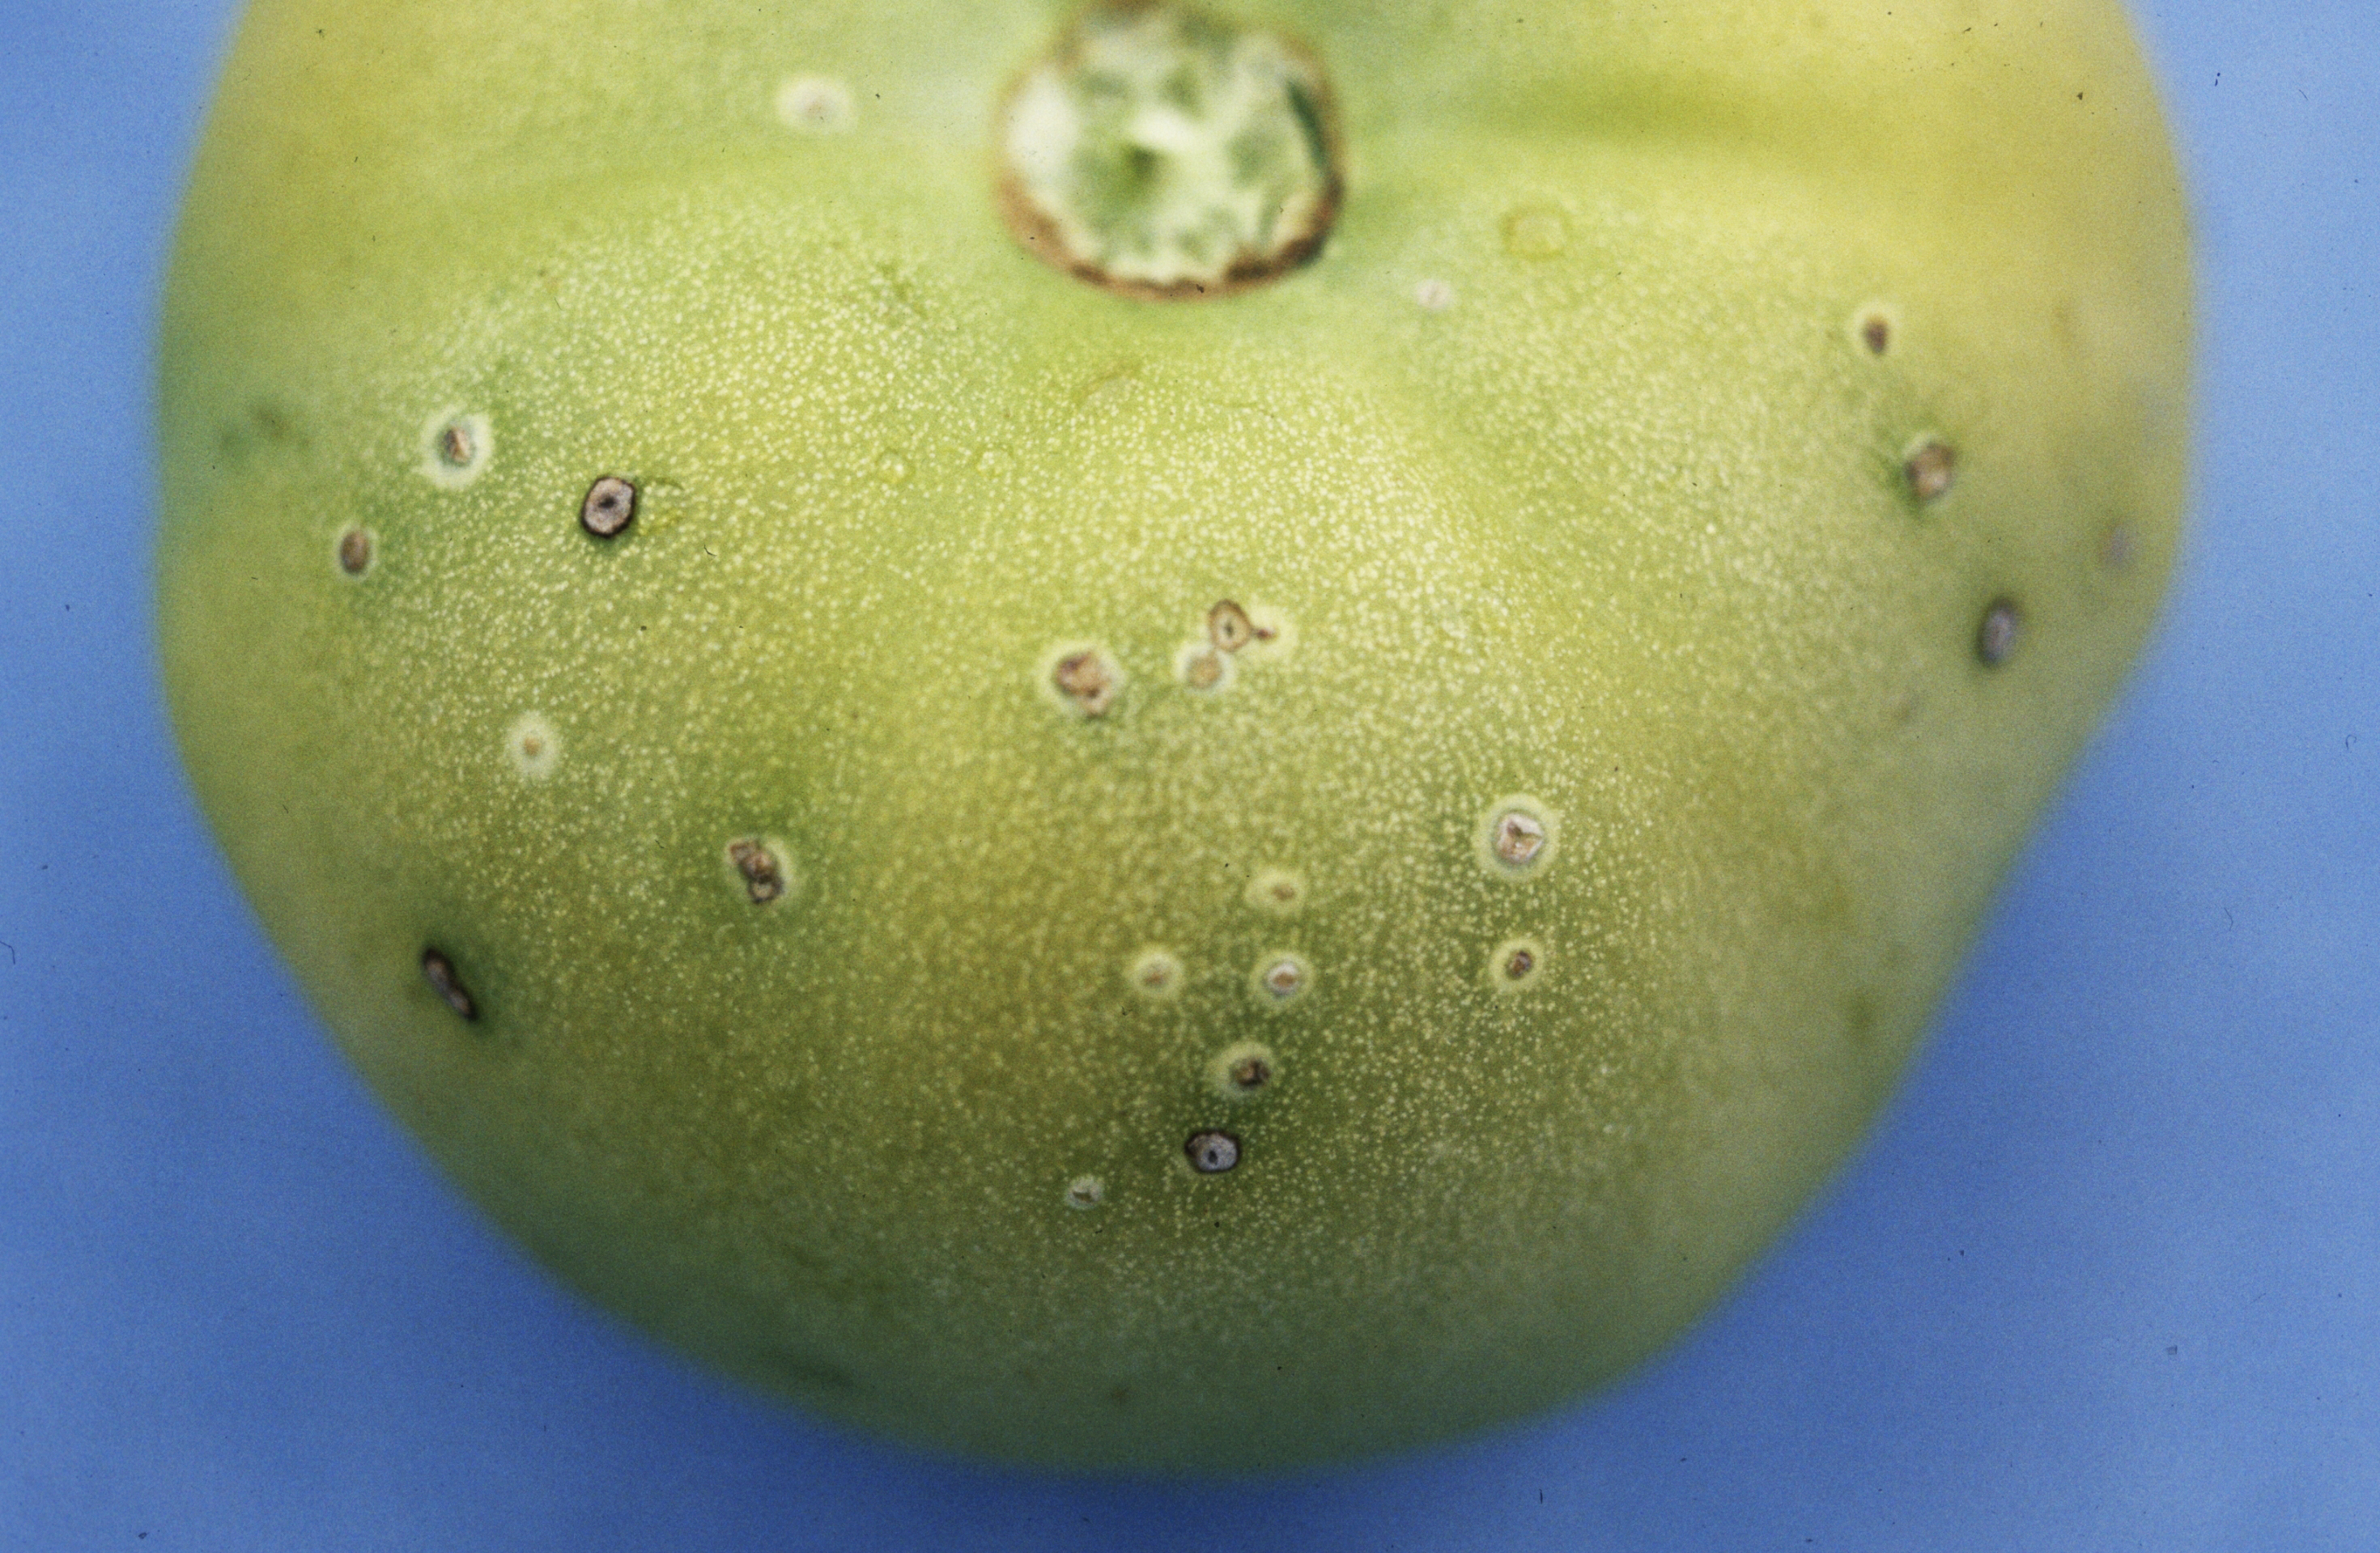 Bacterial canker causing fruit spotting.